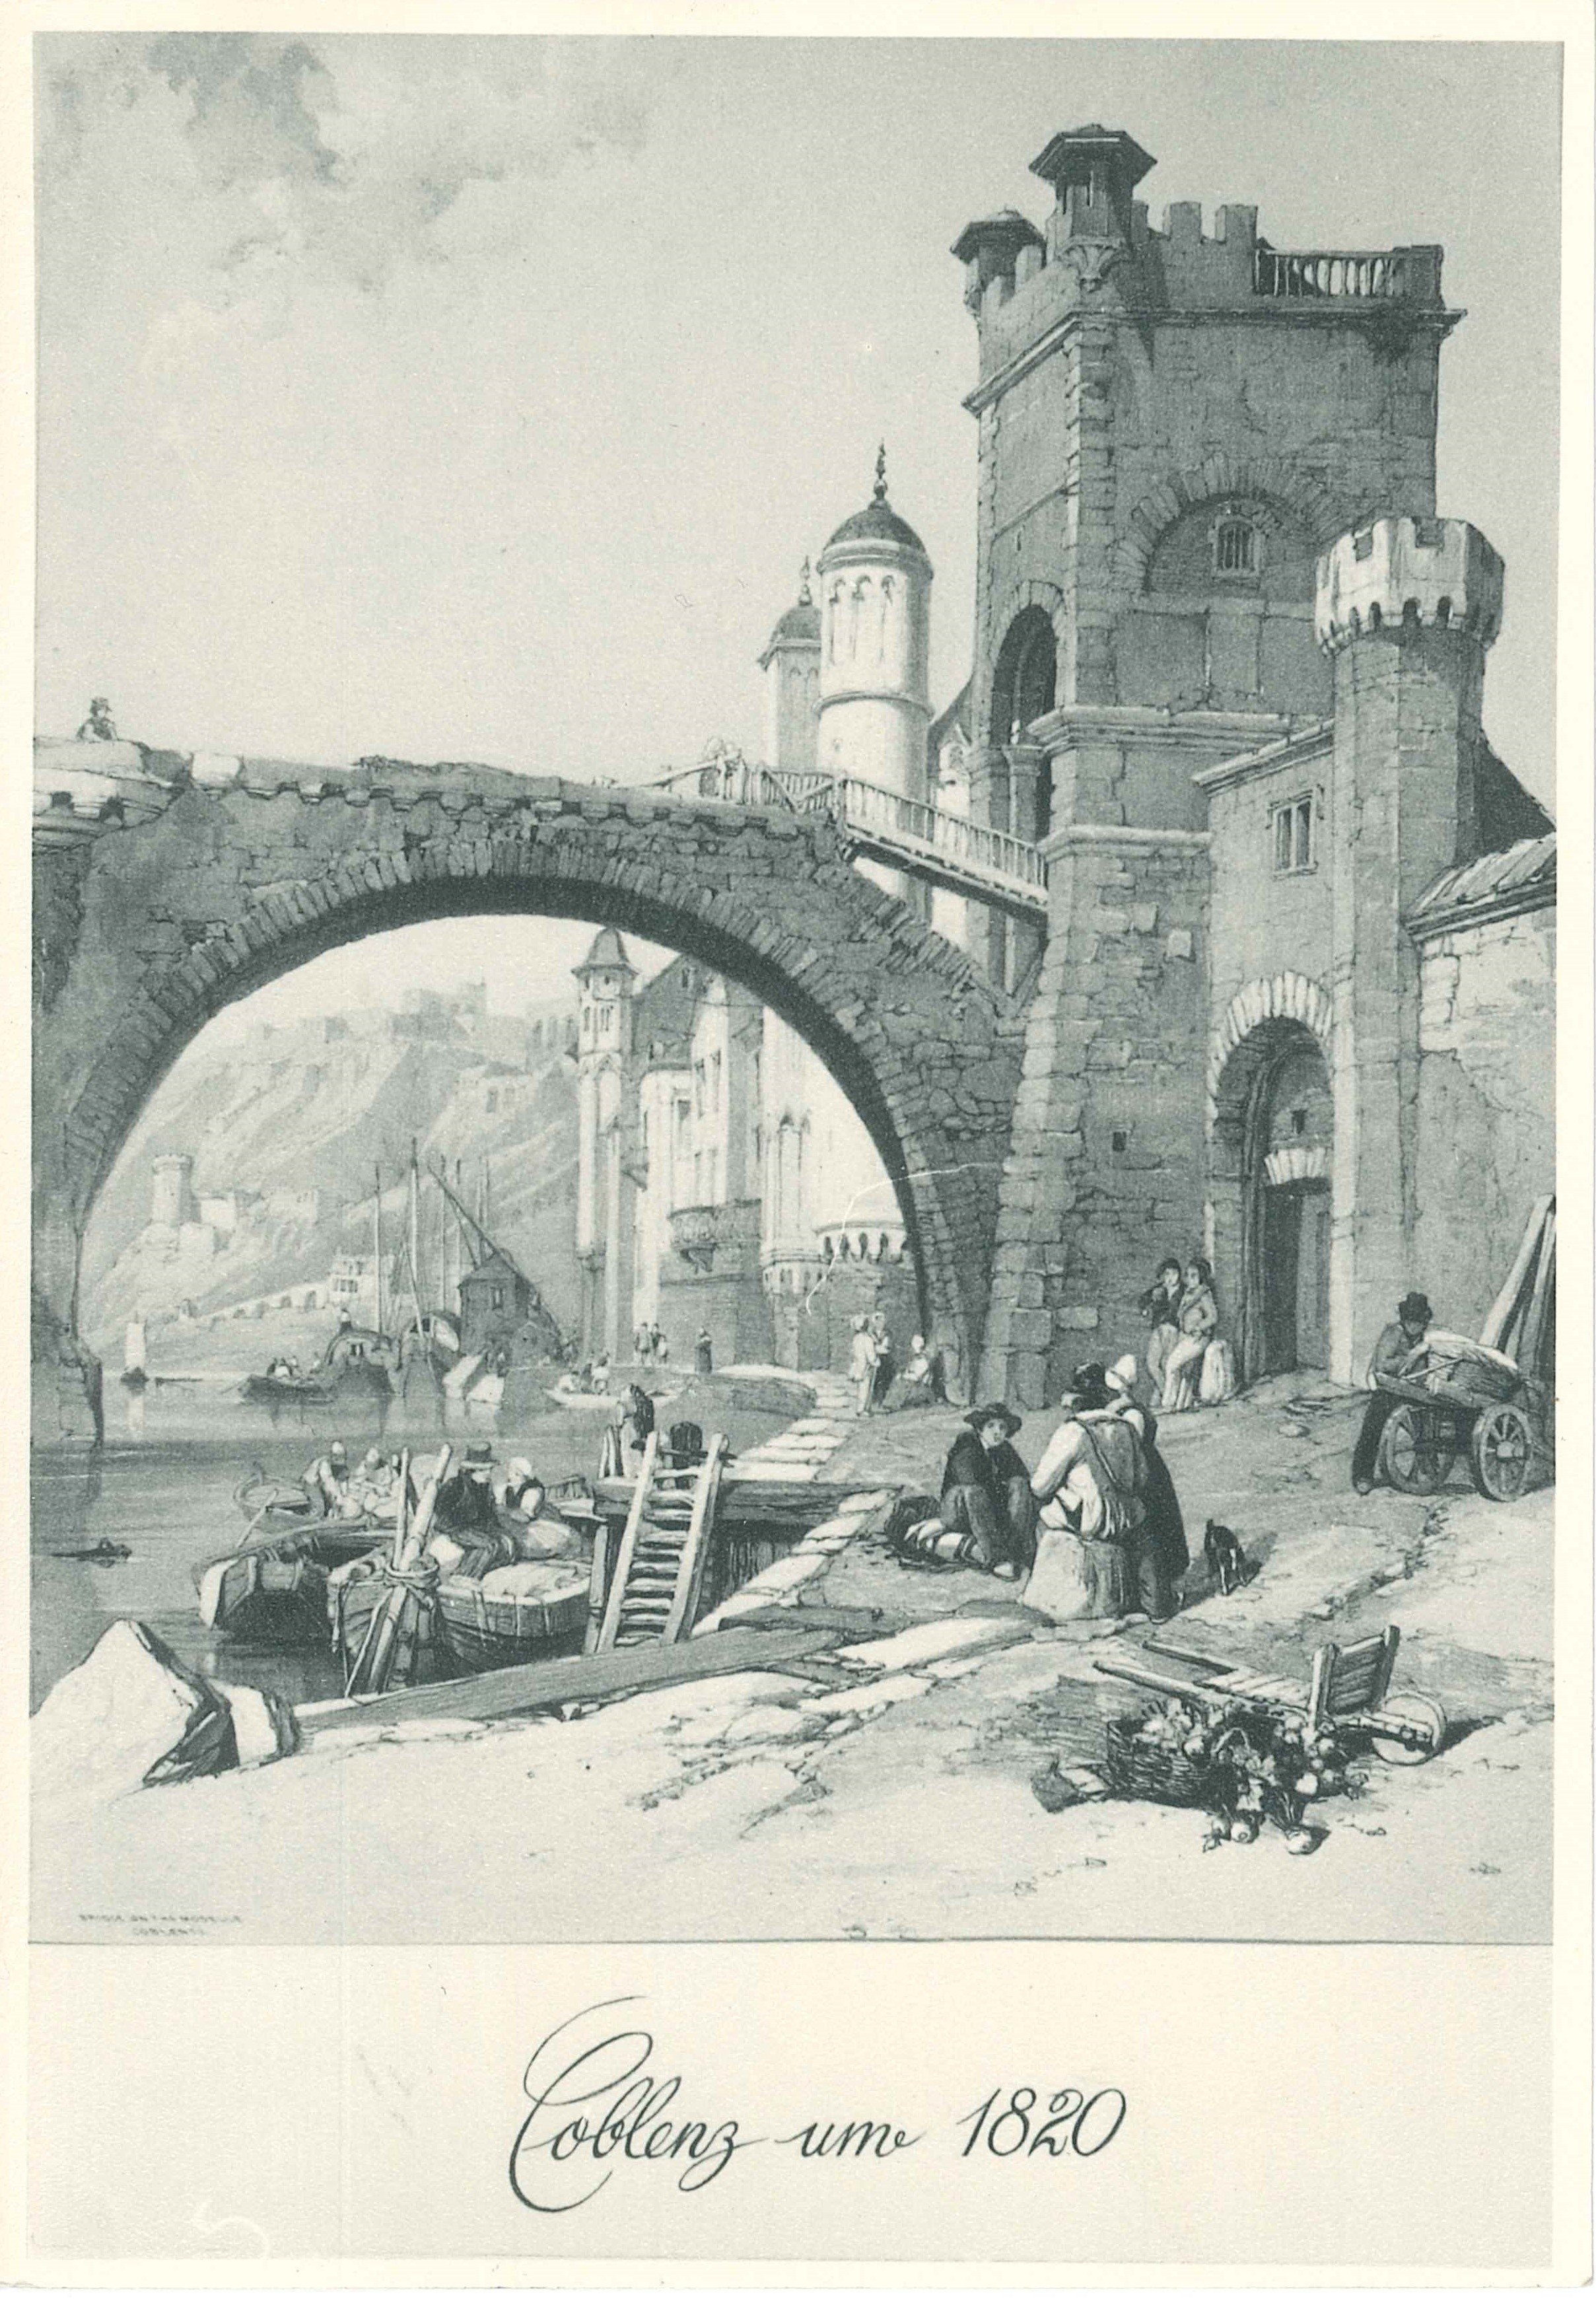 Postkarte, Ansicht von Koblenz um 1820 (REM CC BY-NC-SA)